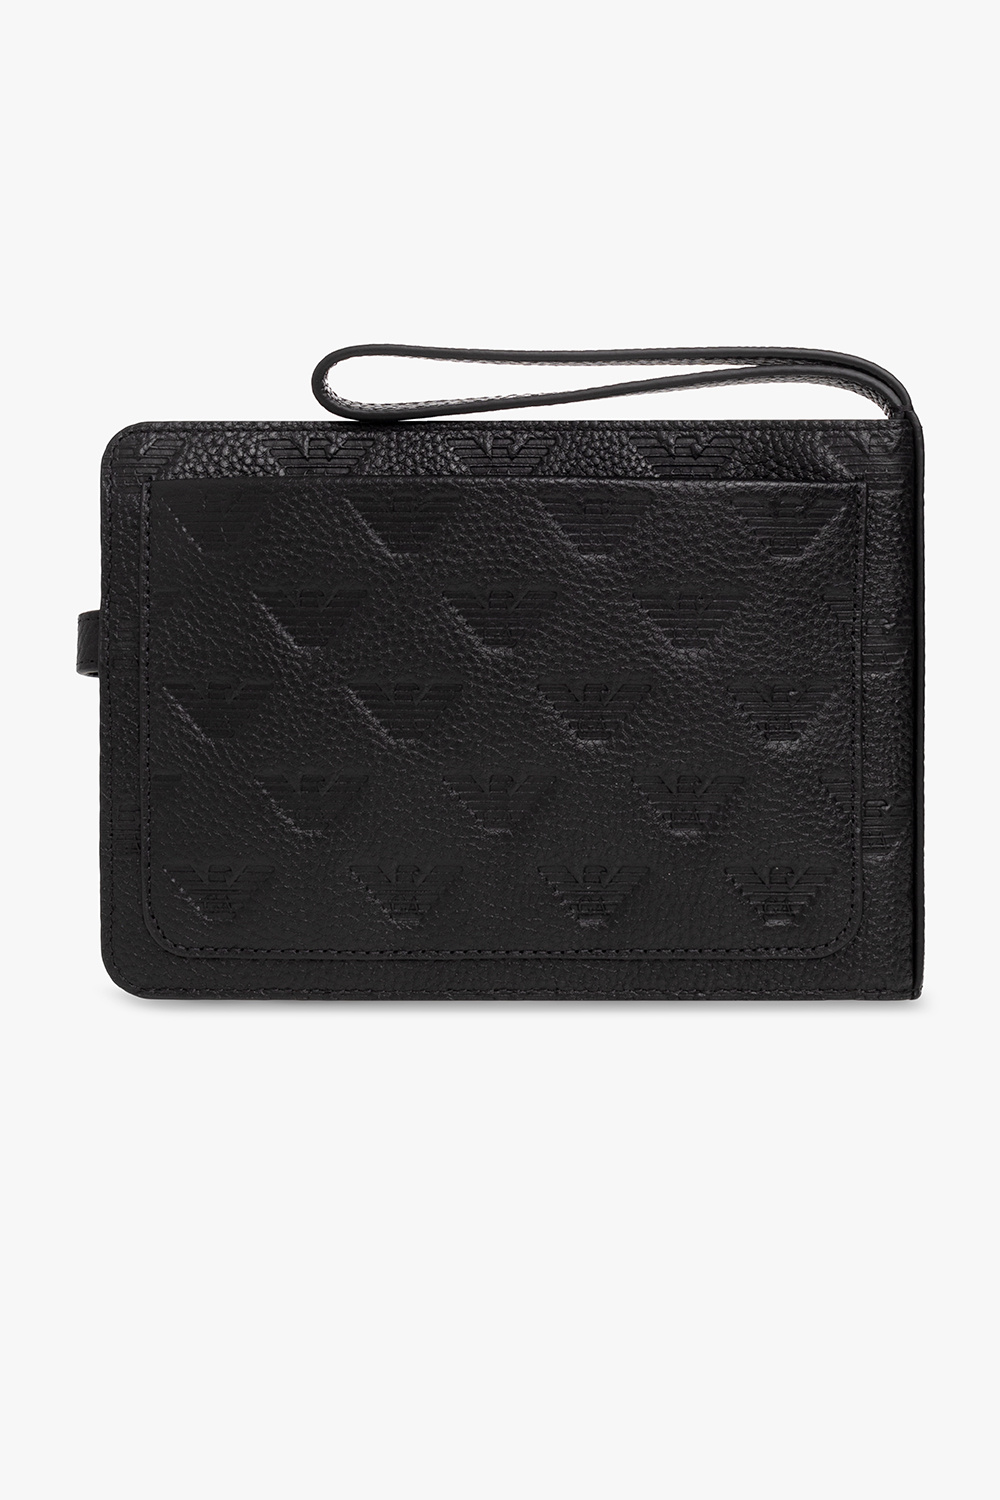 Emporio xk220 armani Leather wallet